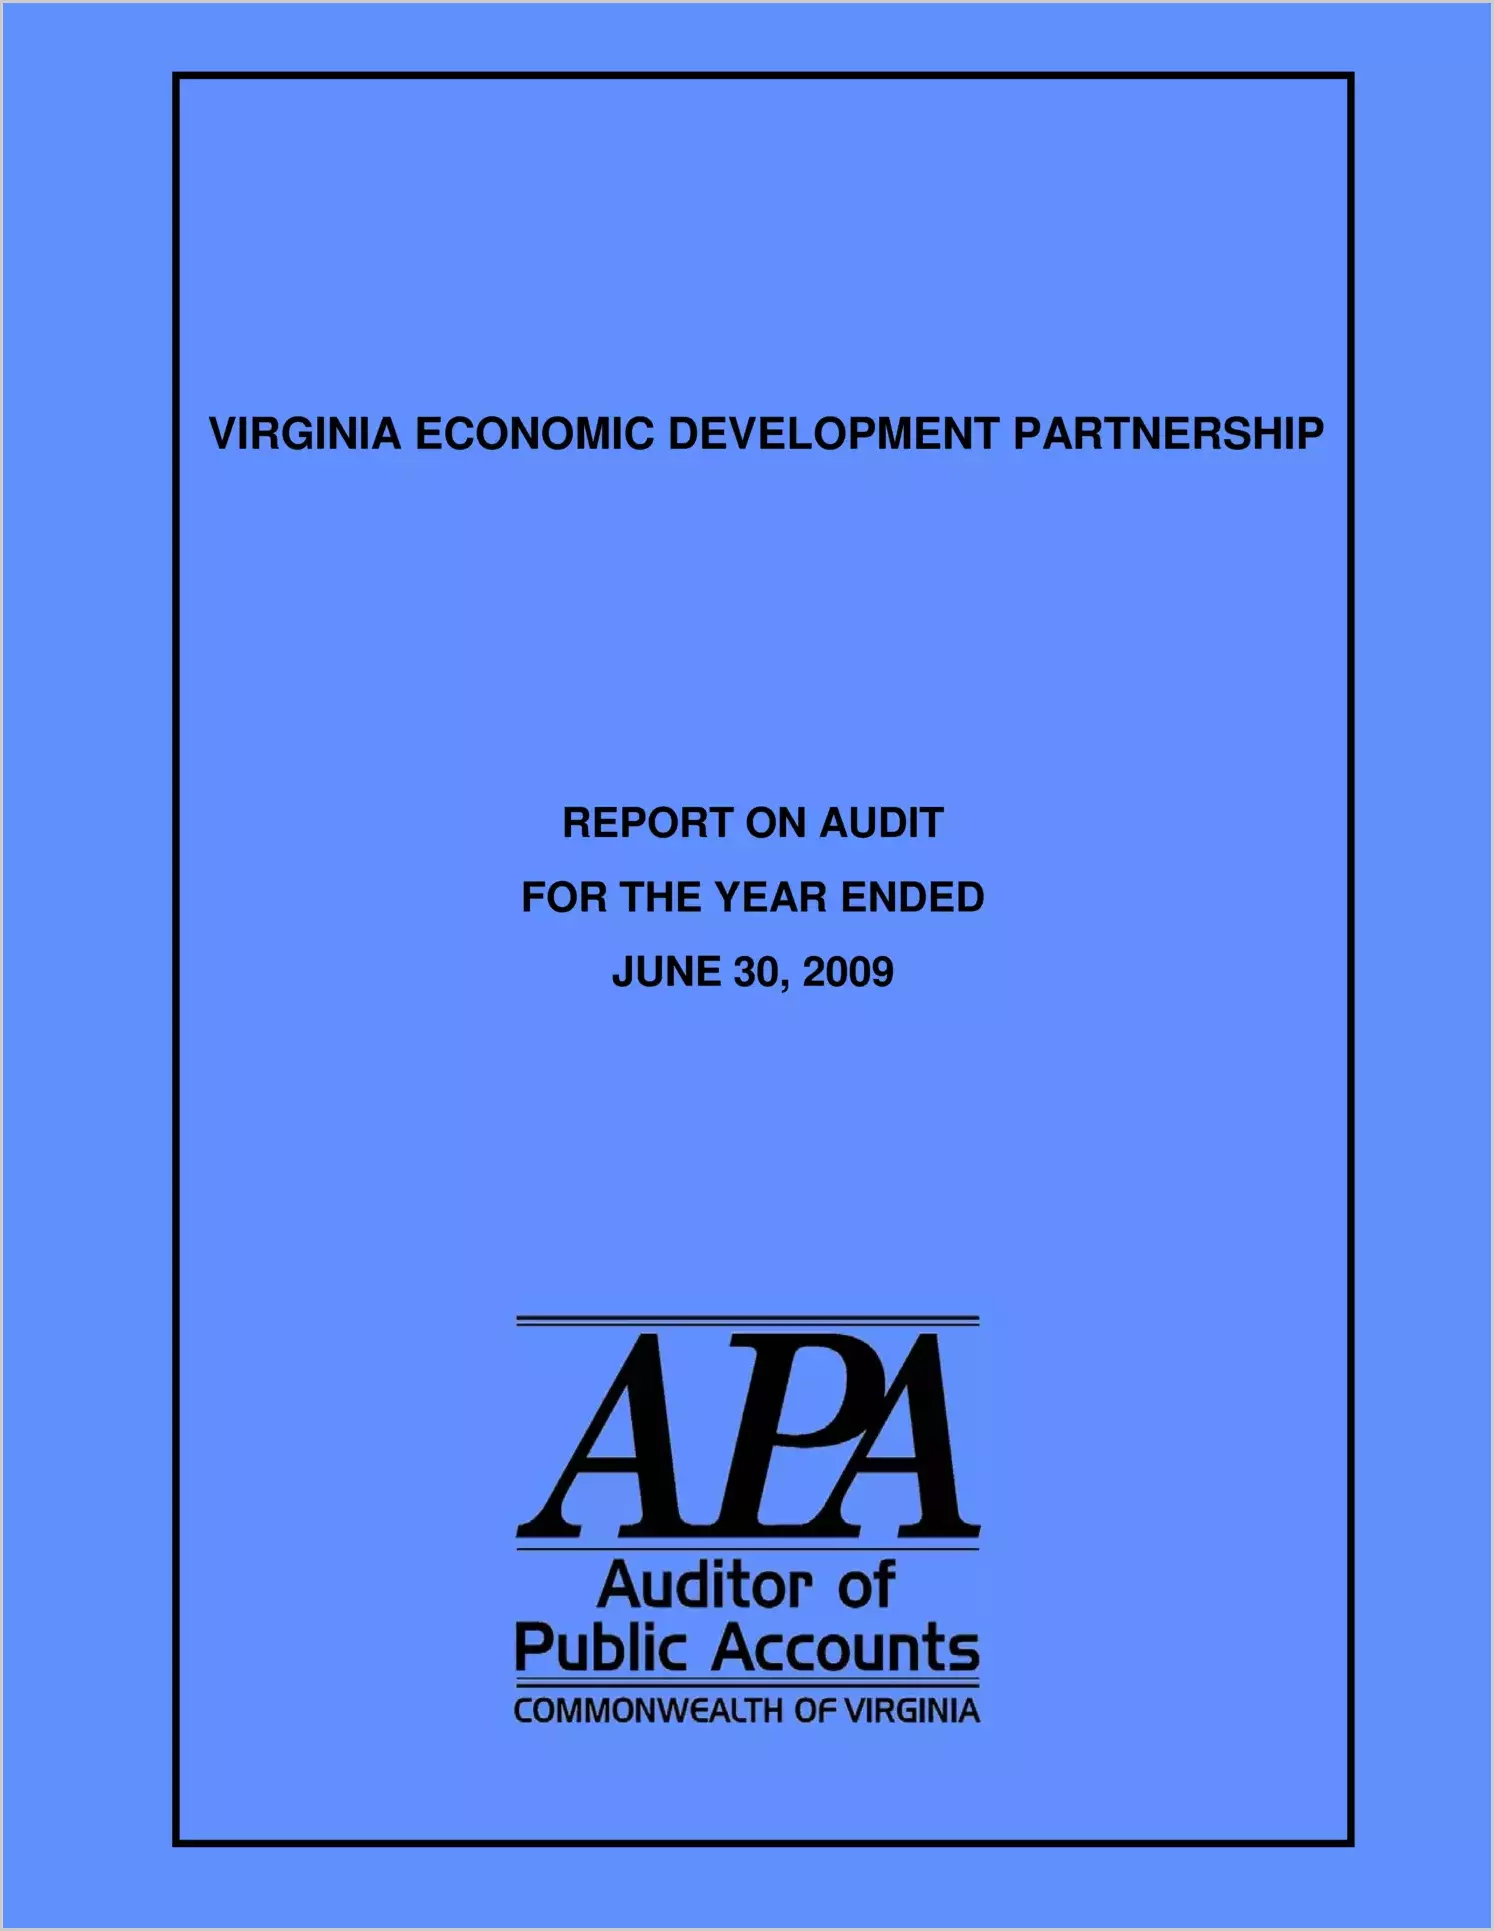 Virginia Economic Development Partnership for the year ended June 30, 2009